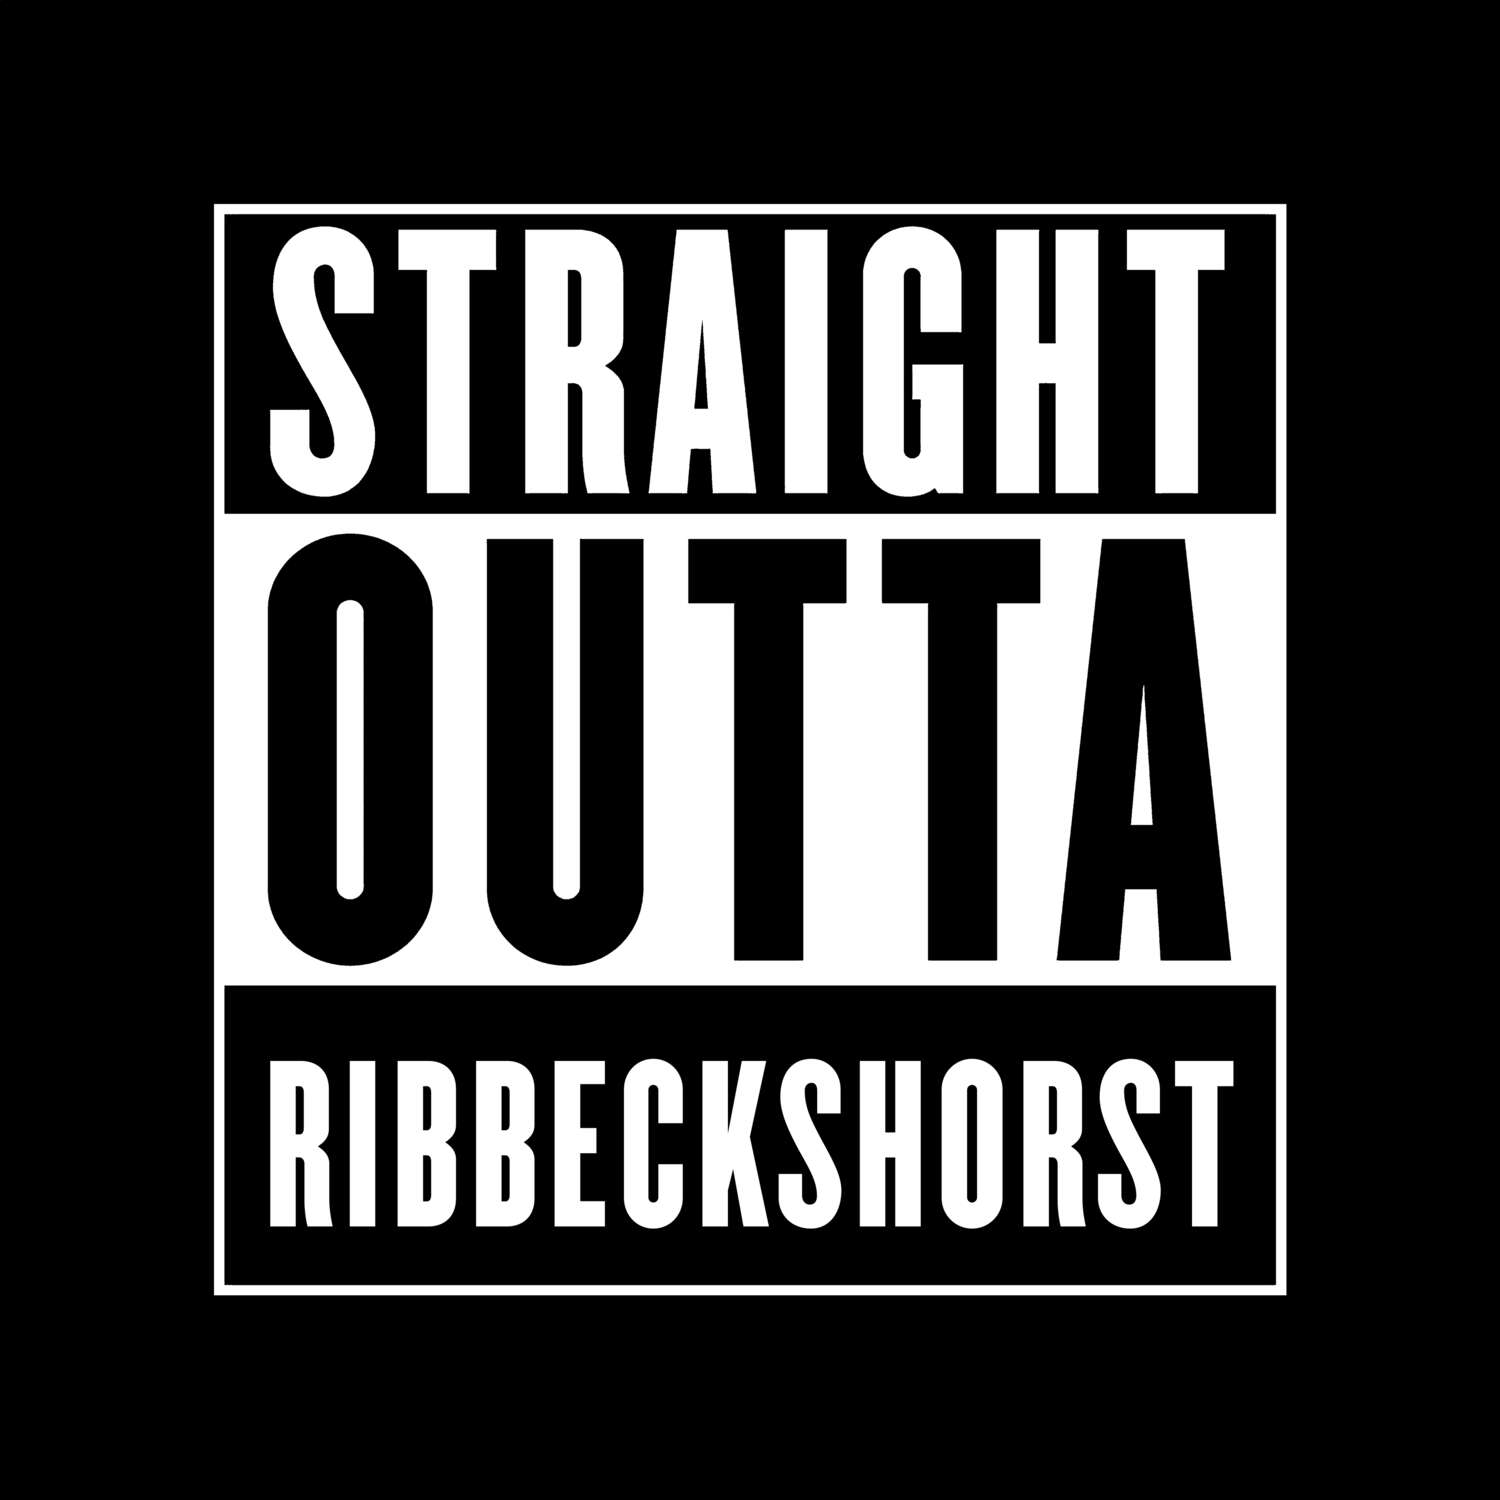 Ribbeckshorst T-Shirt »Straight Outta«